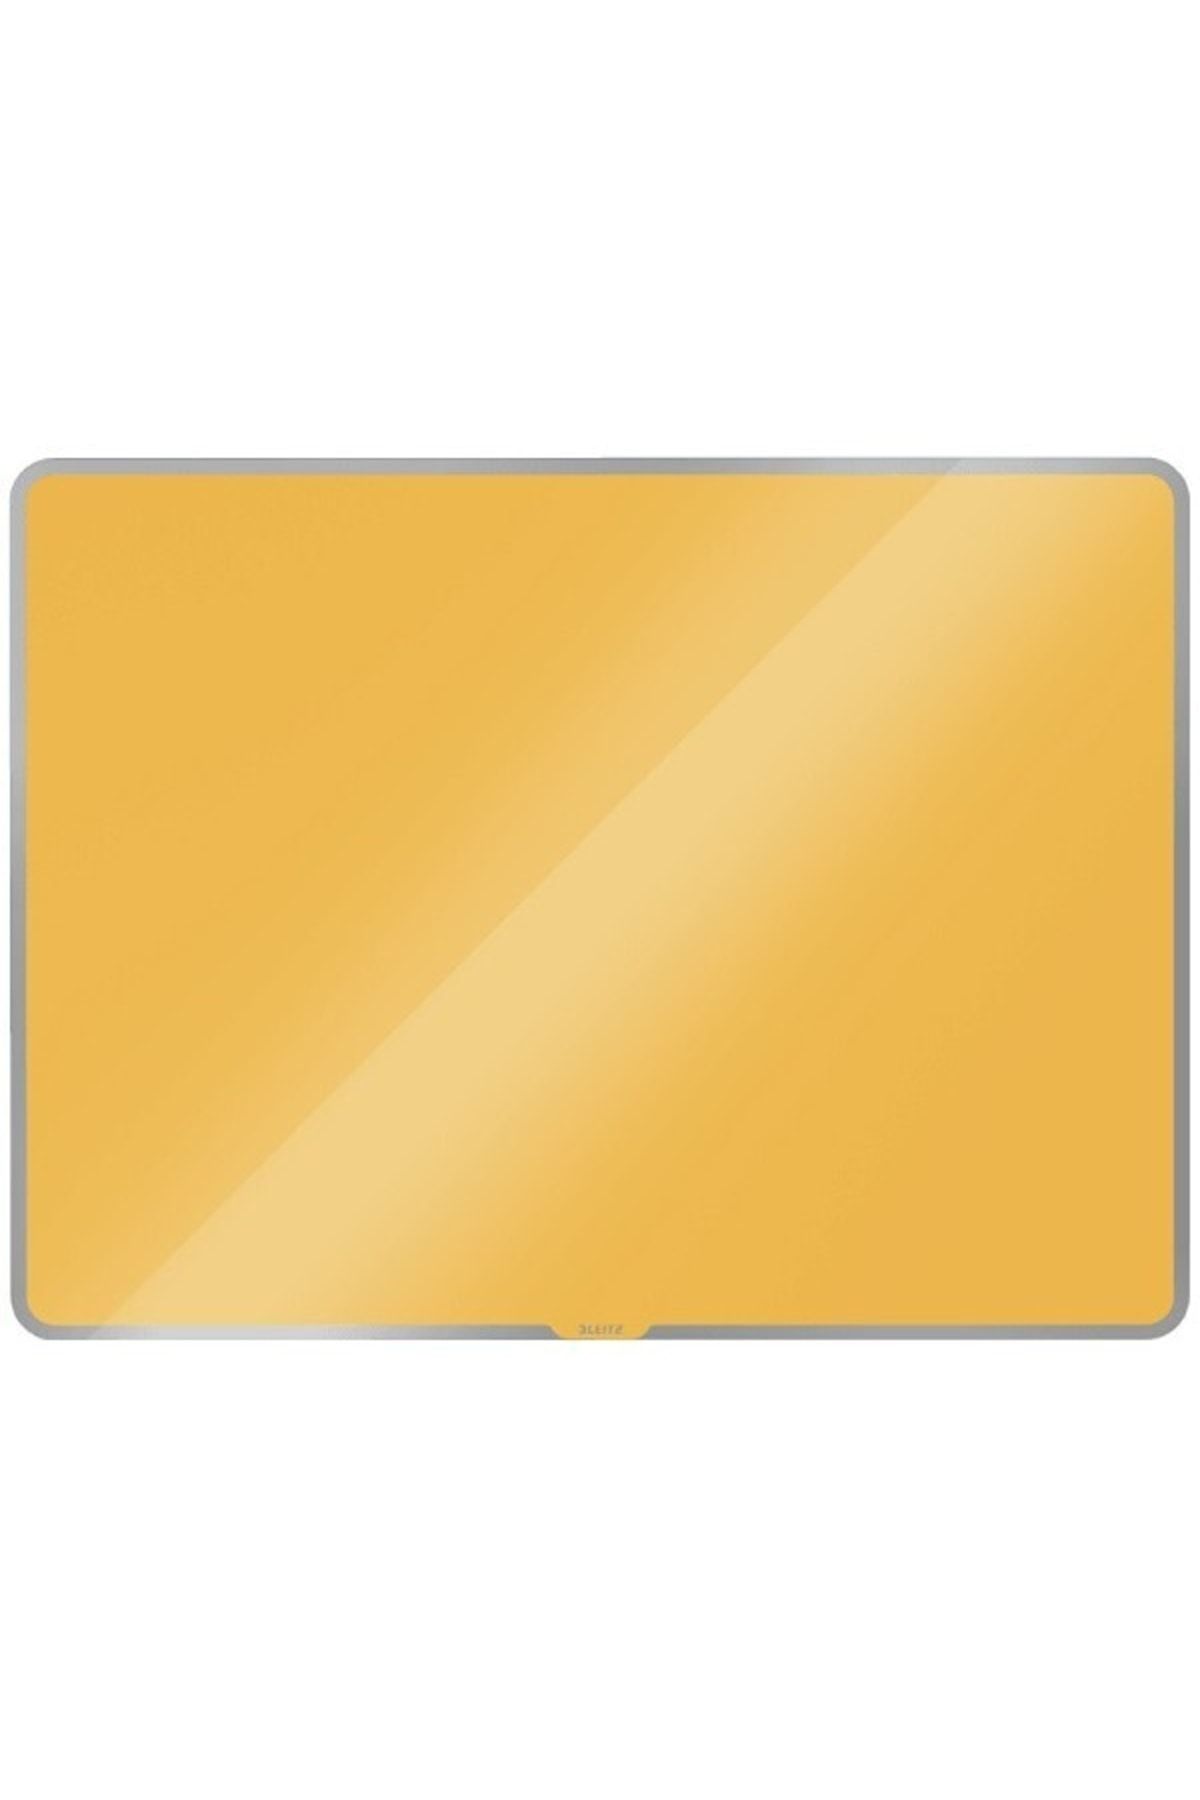 Leitz Cosy Manyetik Cam Beyaz Tahta 800x600m, Sarı Sarı